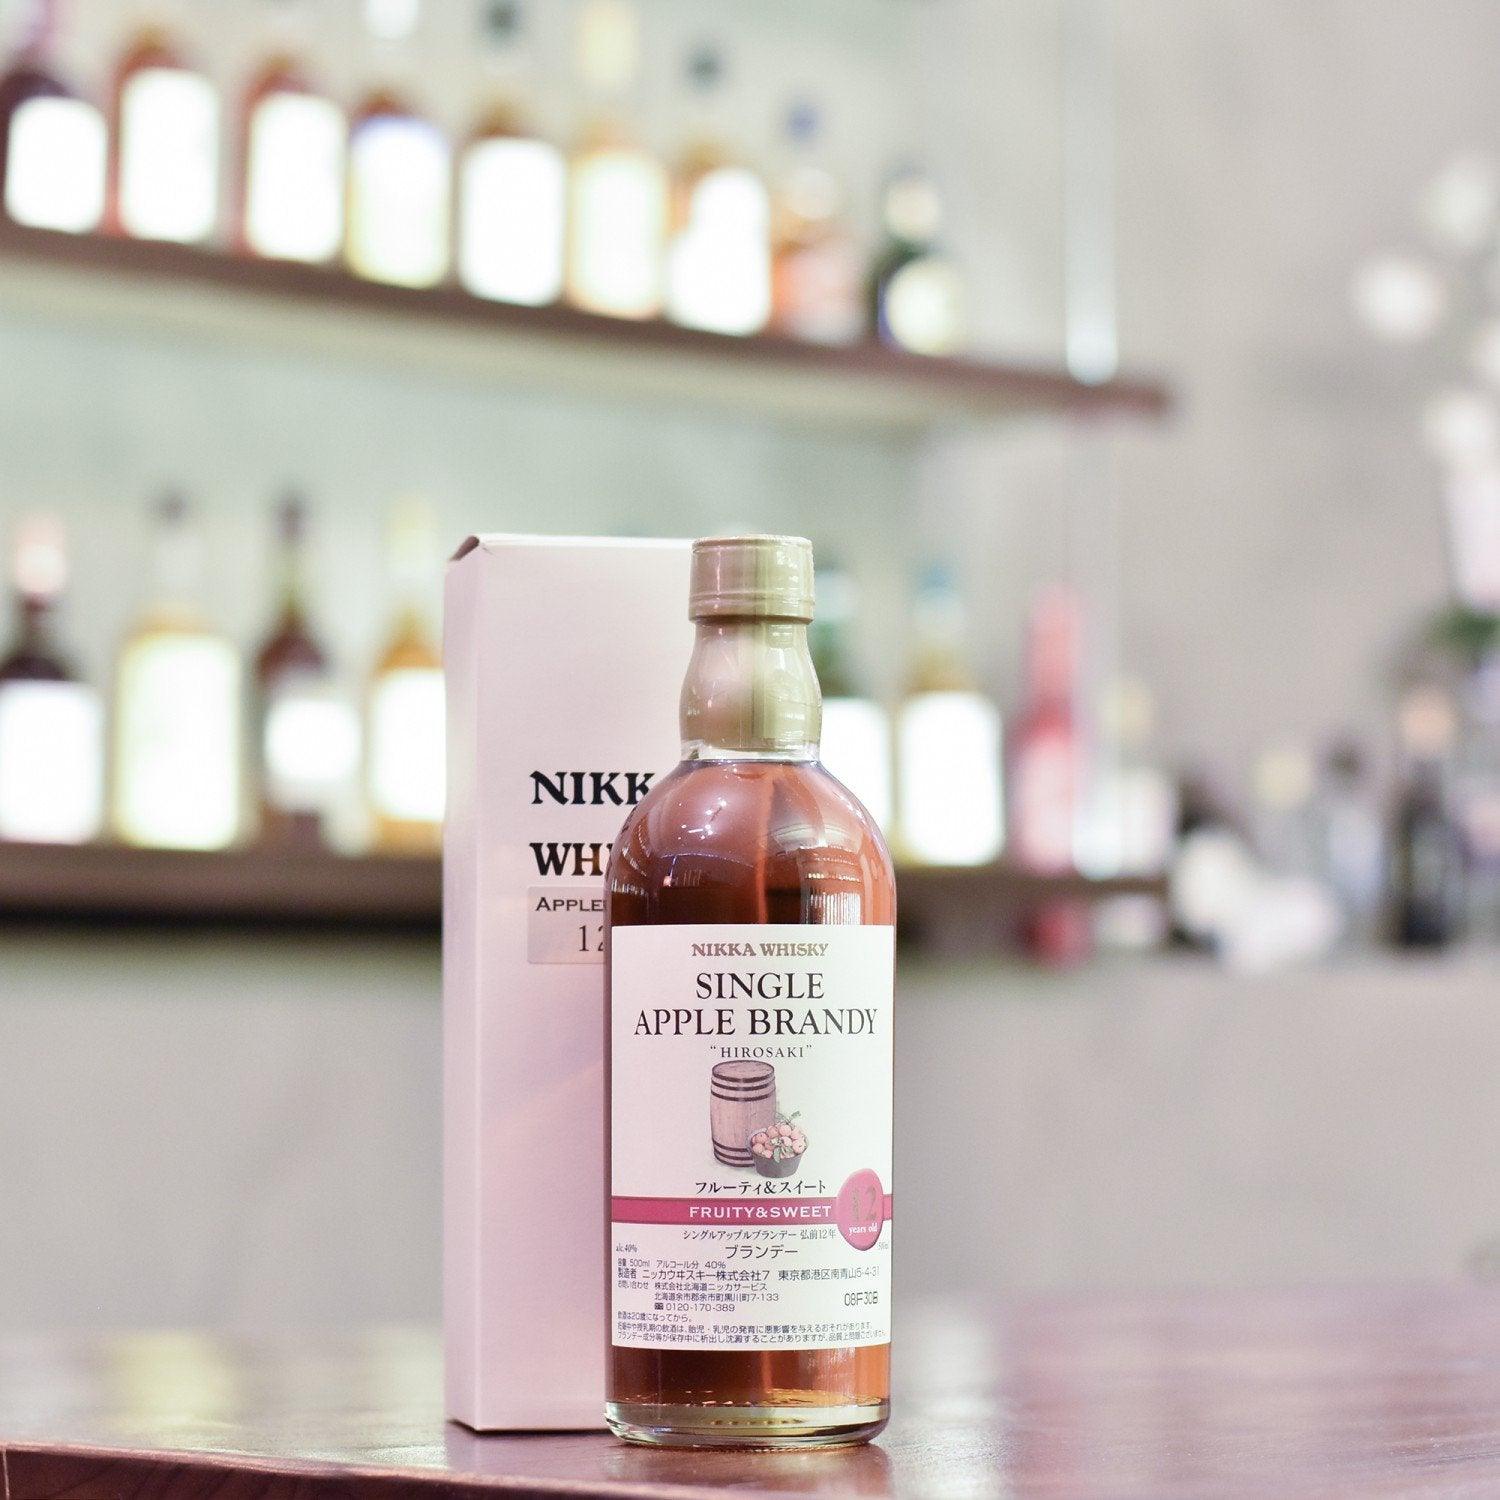 Nikka Single Apple Brandy 12 Year Old - Fruity & Sweet - The Rare Malt